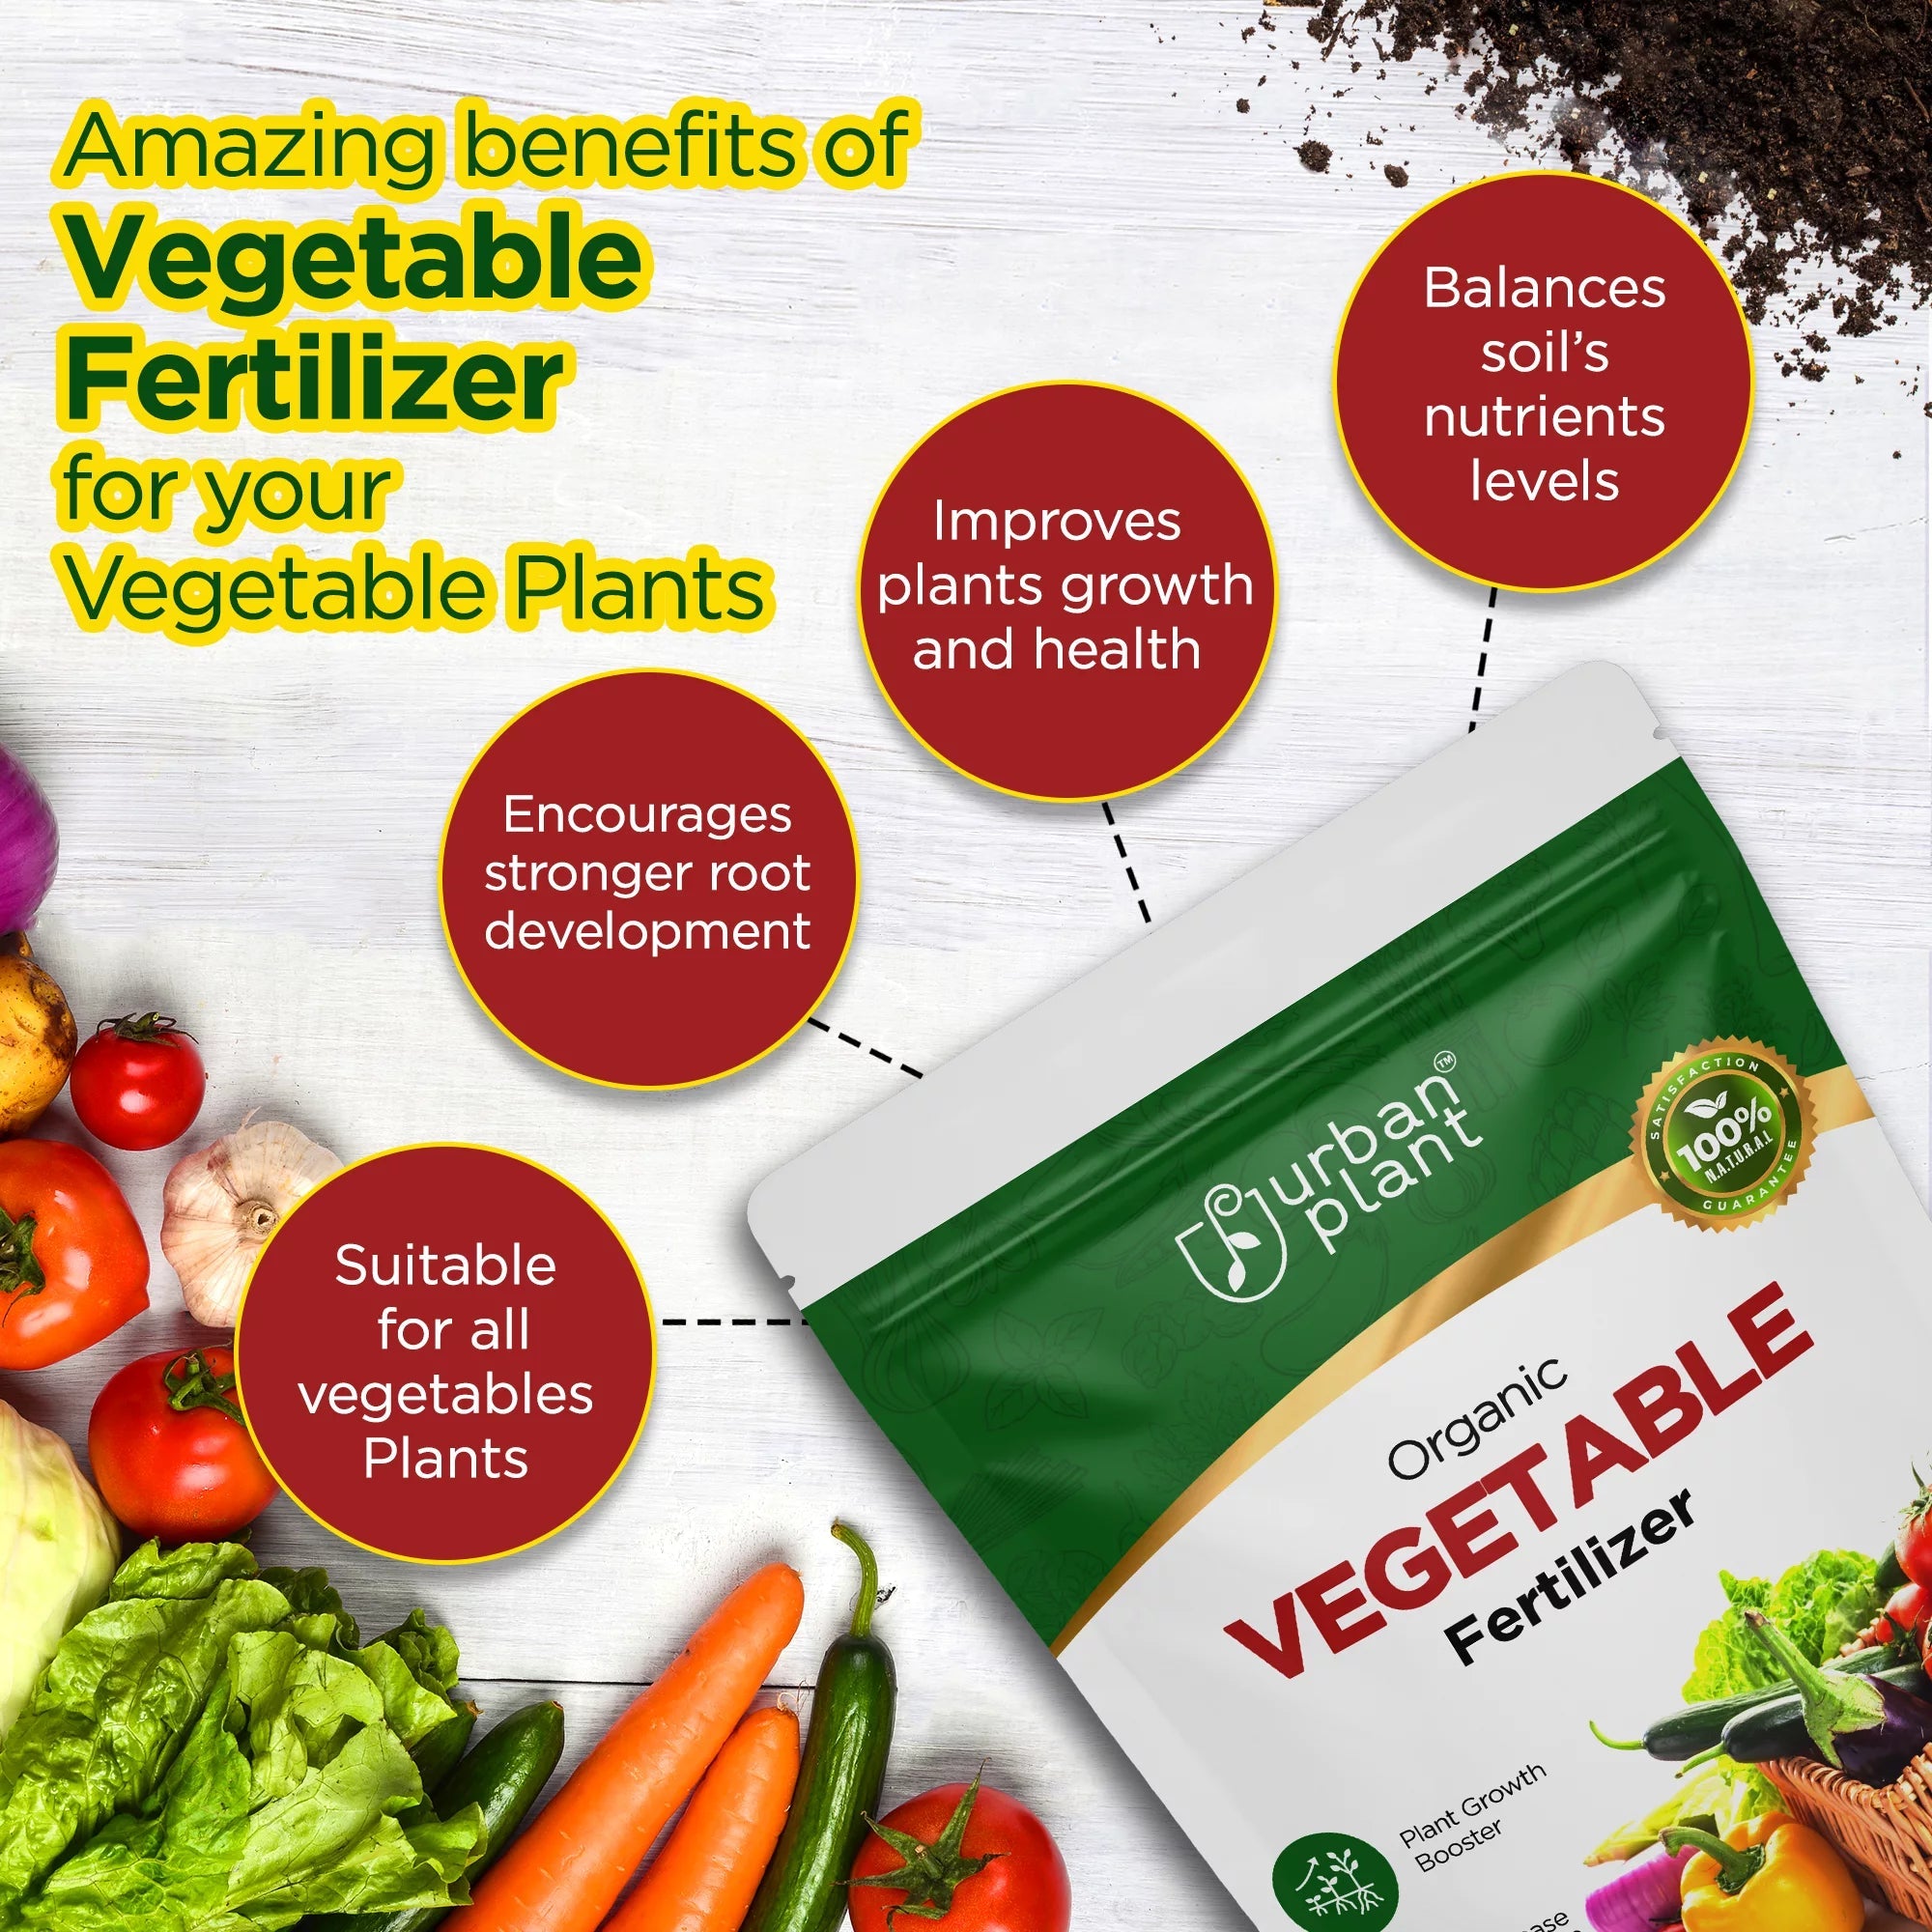 Vegetable Fertilizer for Vegetable Plants 900g Potting Mix Urban Plant 